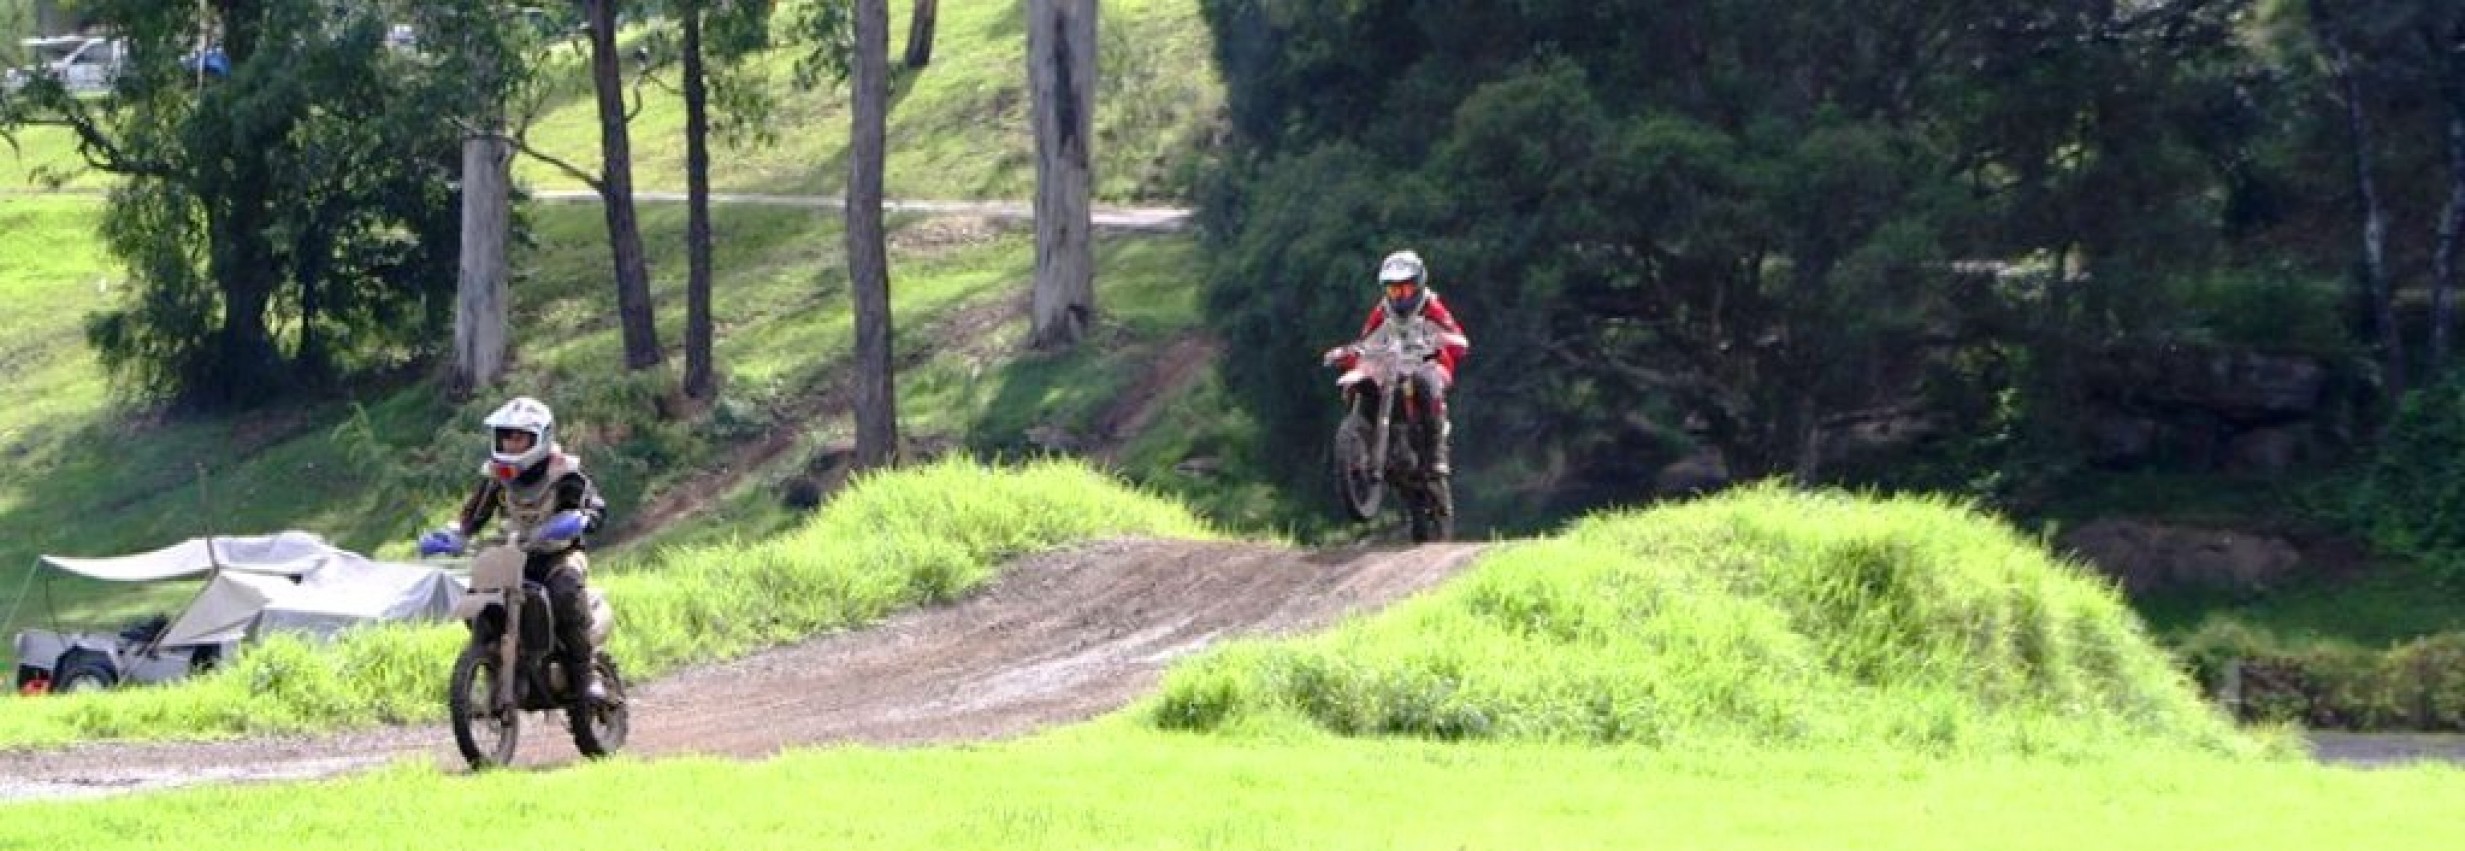 Pacific Park Motorcycle Park – Pacific Park Trials Club